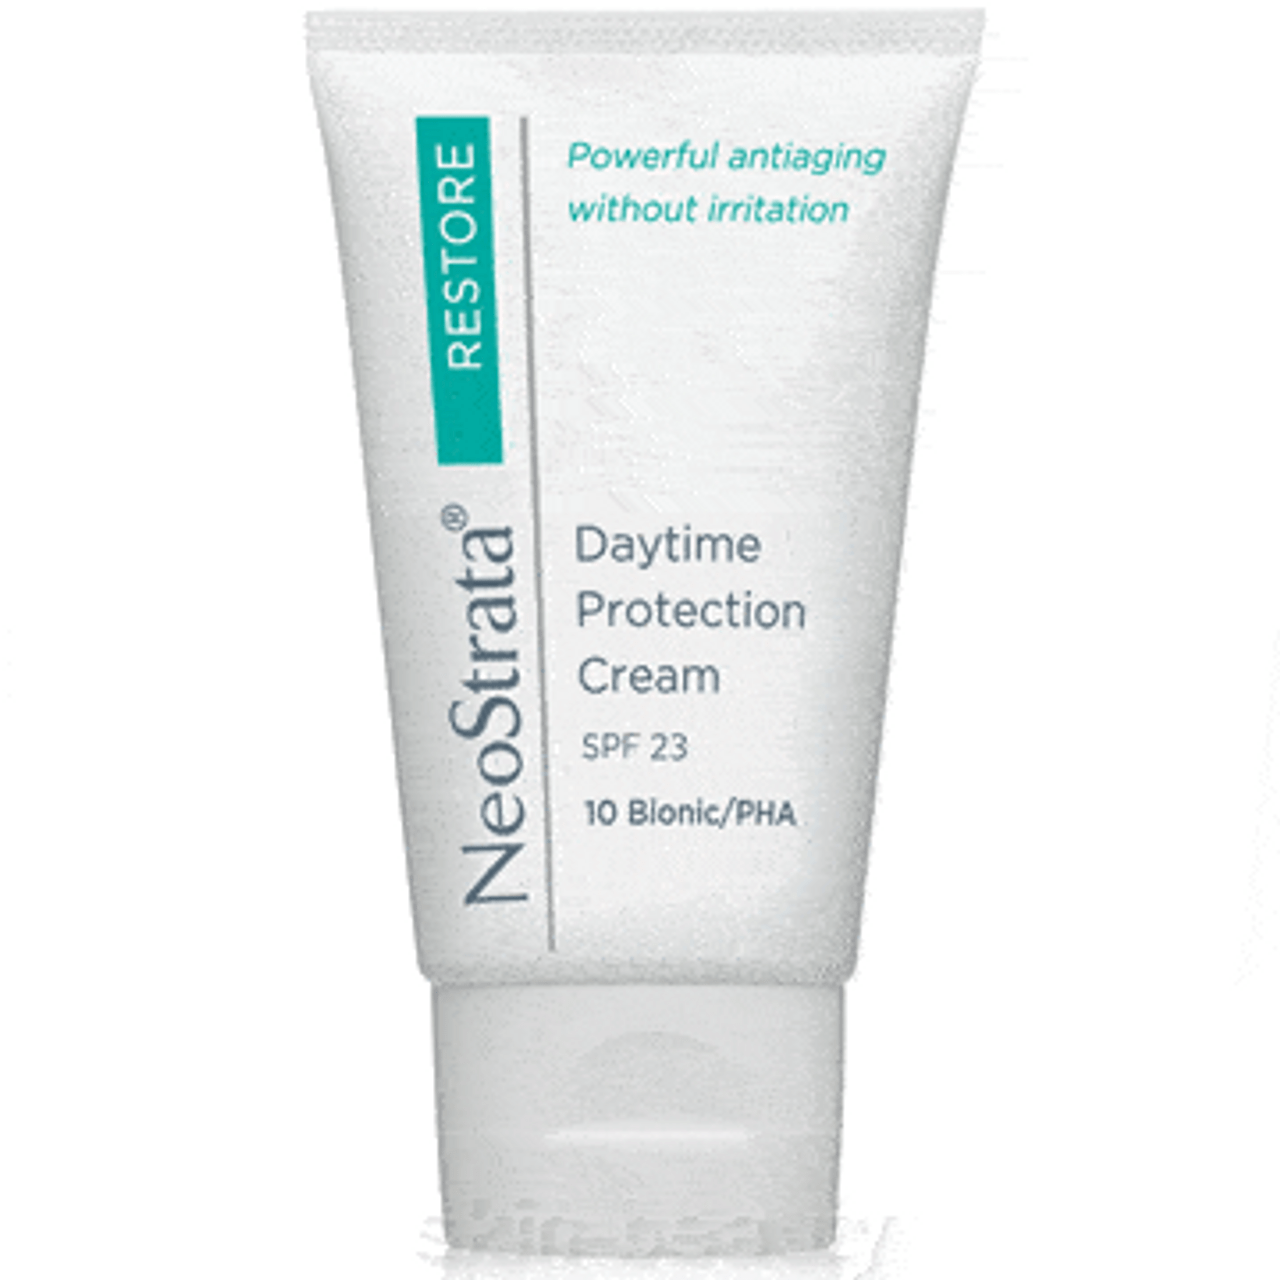 NeoStrata Daytime Protection Cream SPF 23 - 1.4 oz